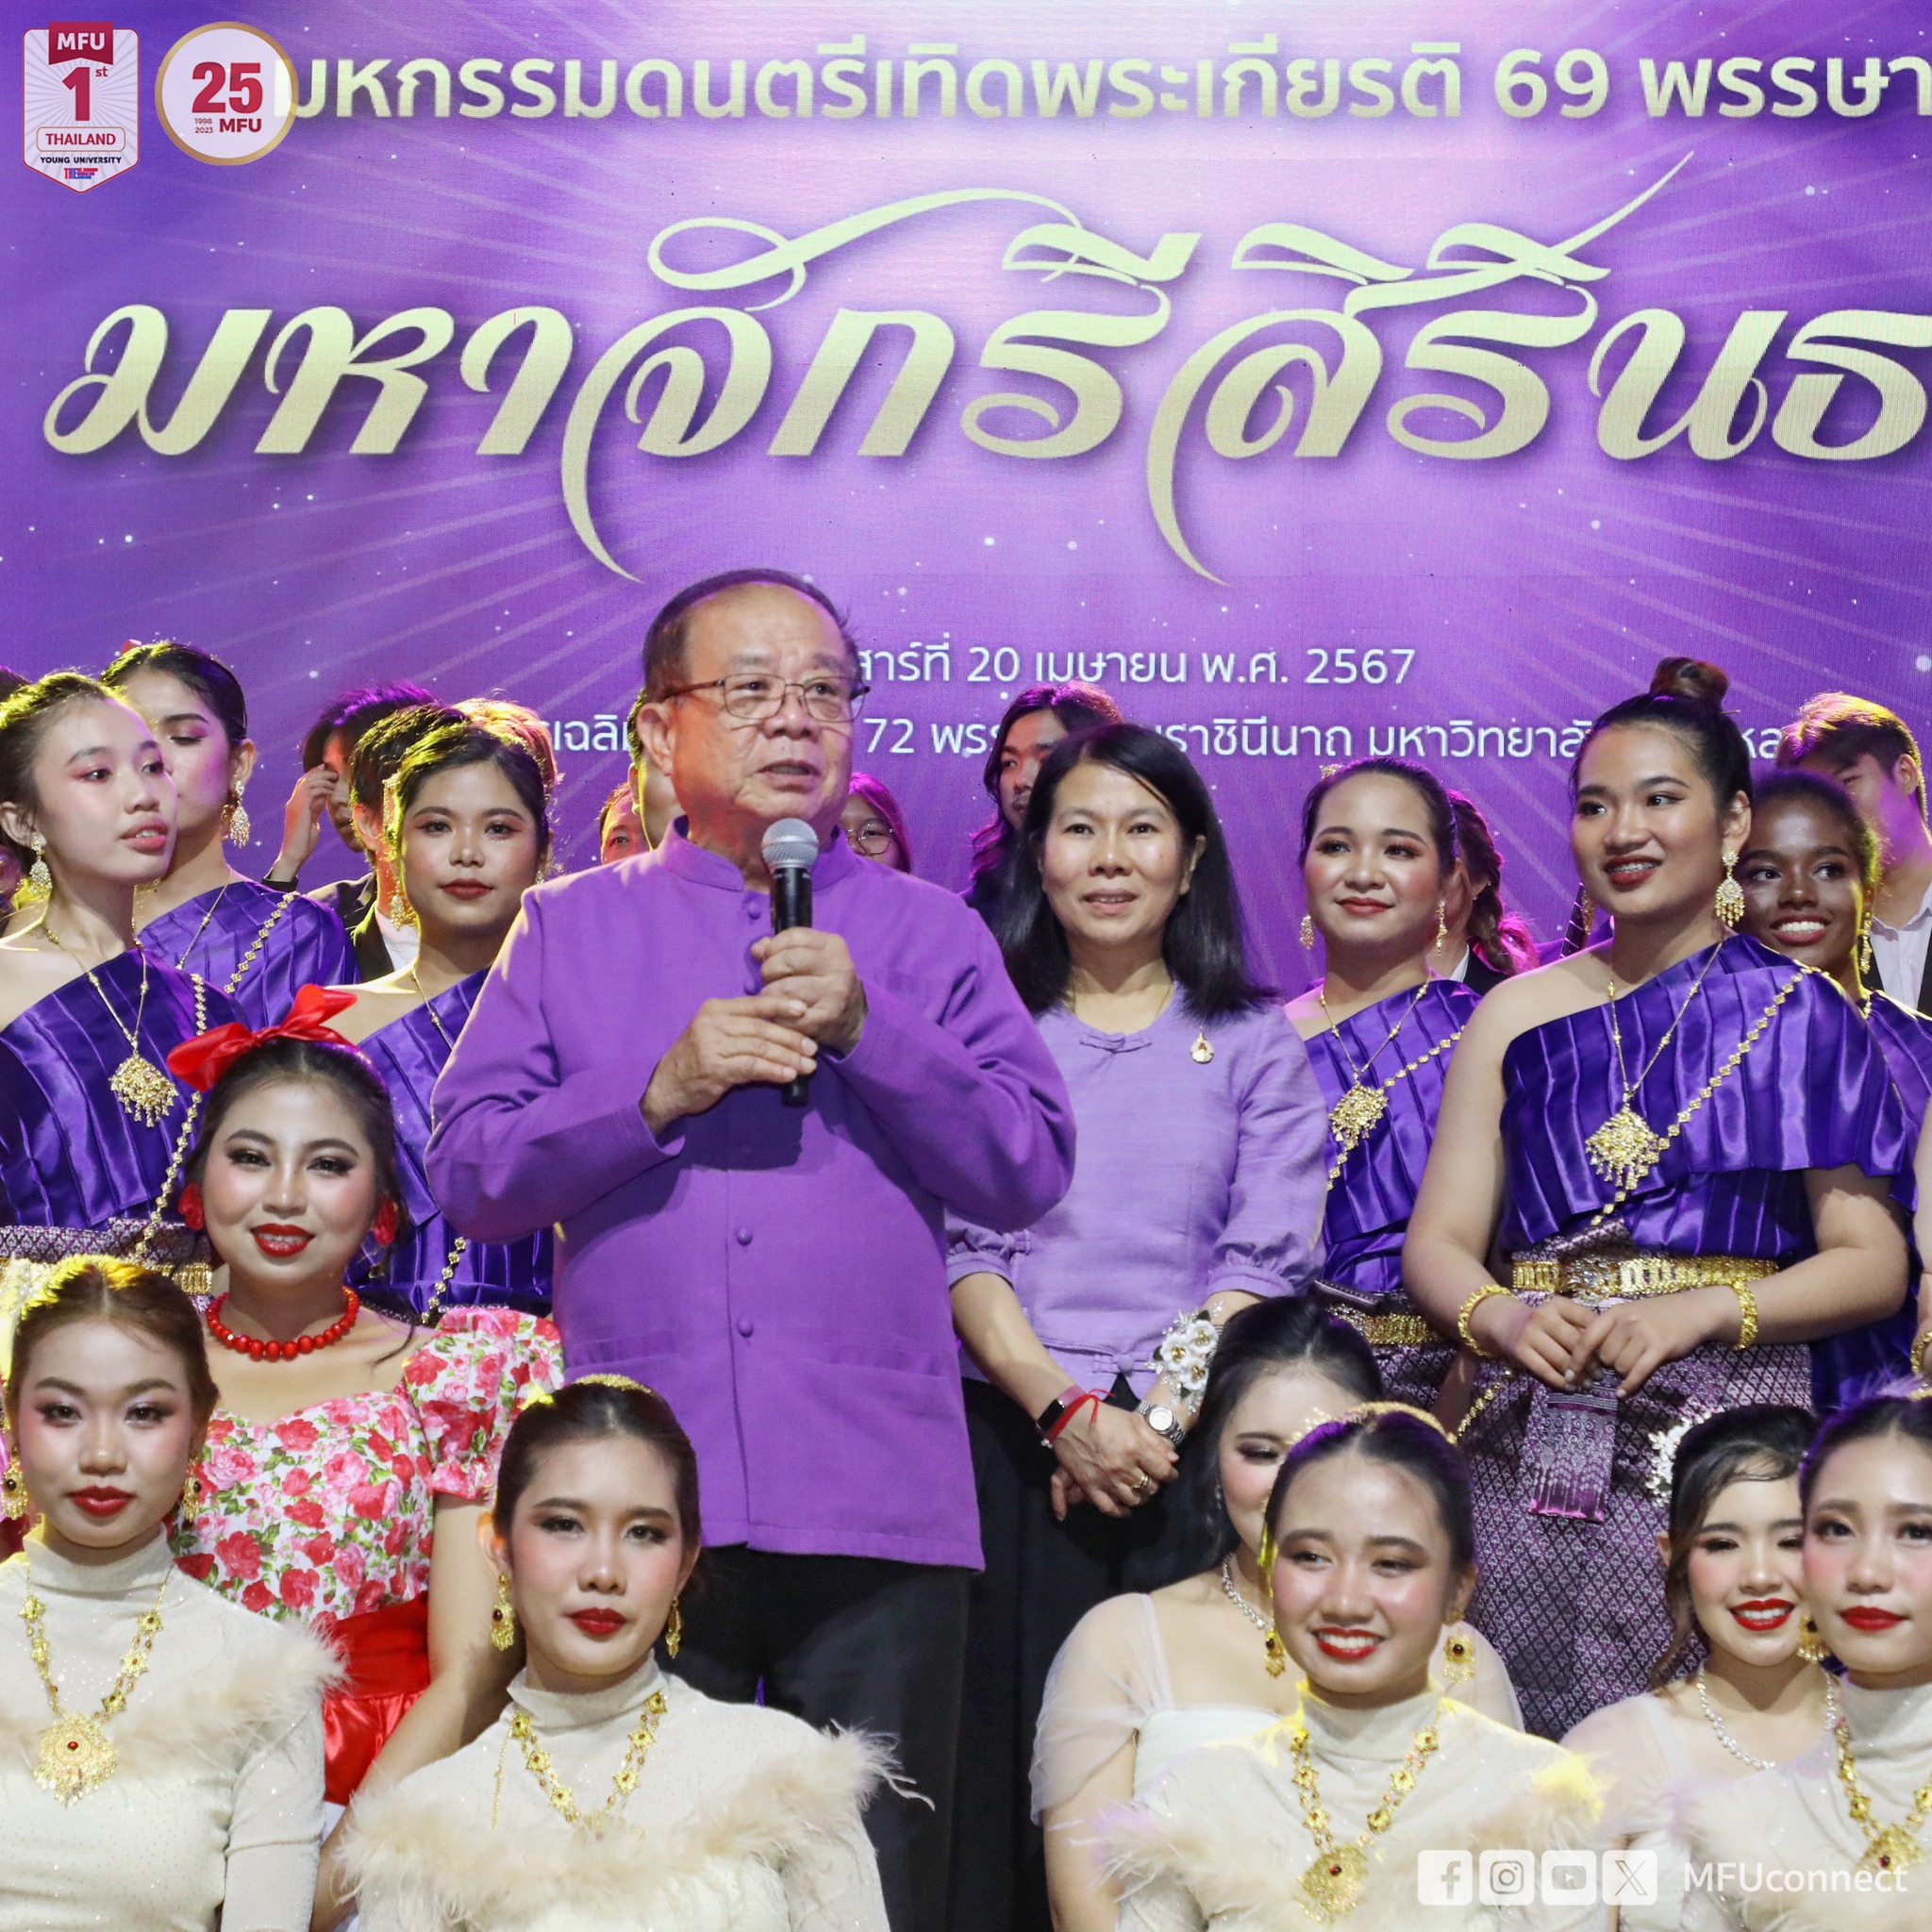 MFU Organises the Music Festival Commemorating the 69th Birthday Anniversary of Her Royal Highness Princess Maha Chakri Sirindhorn